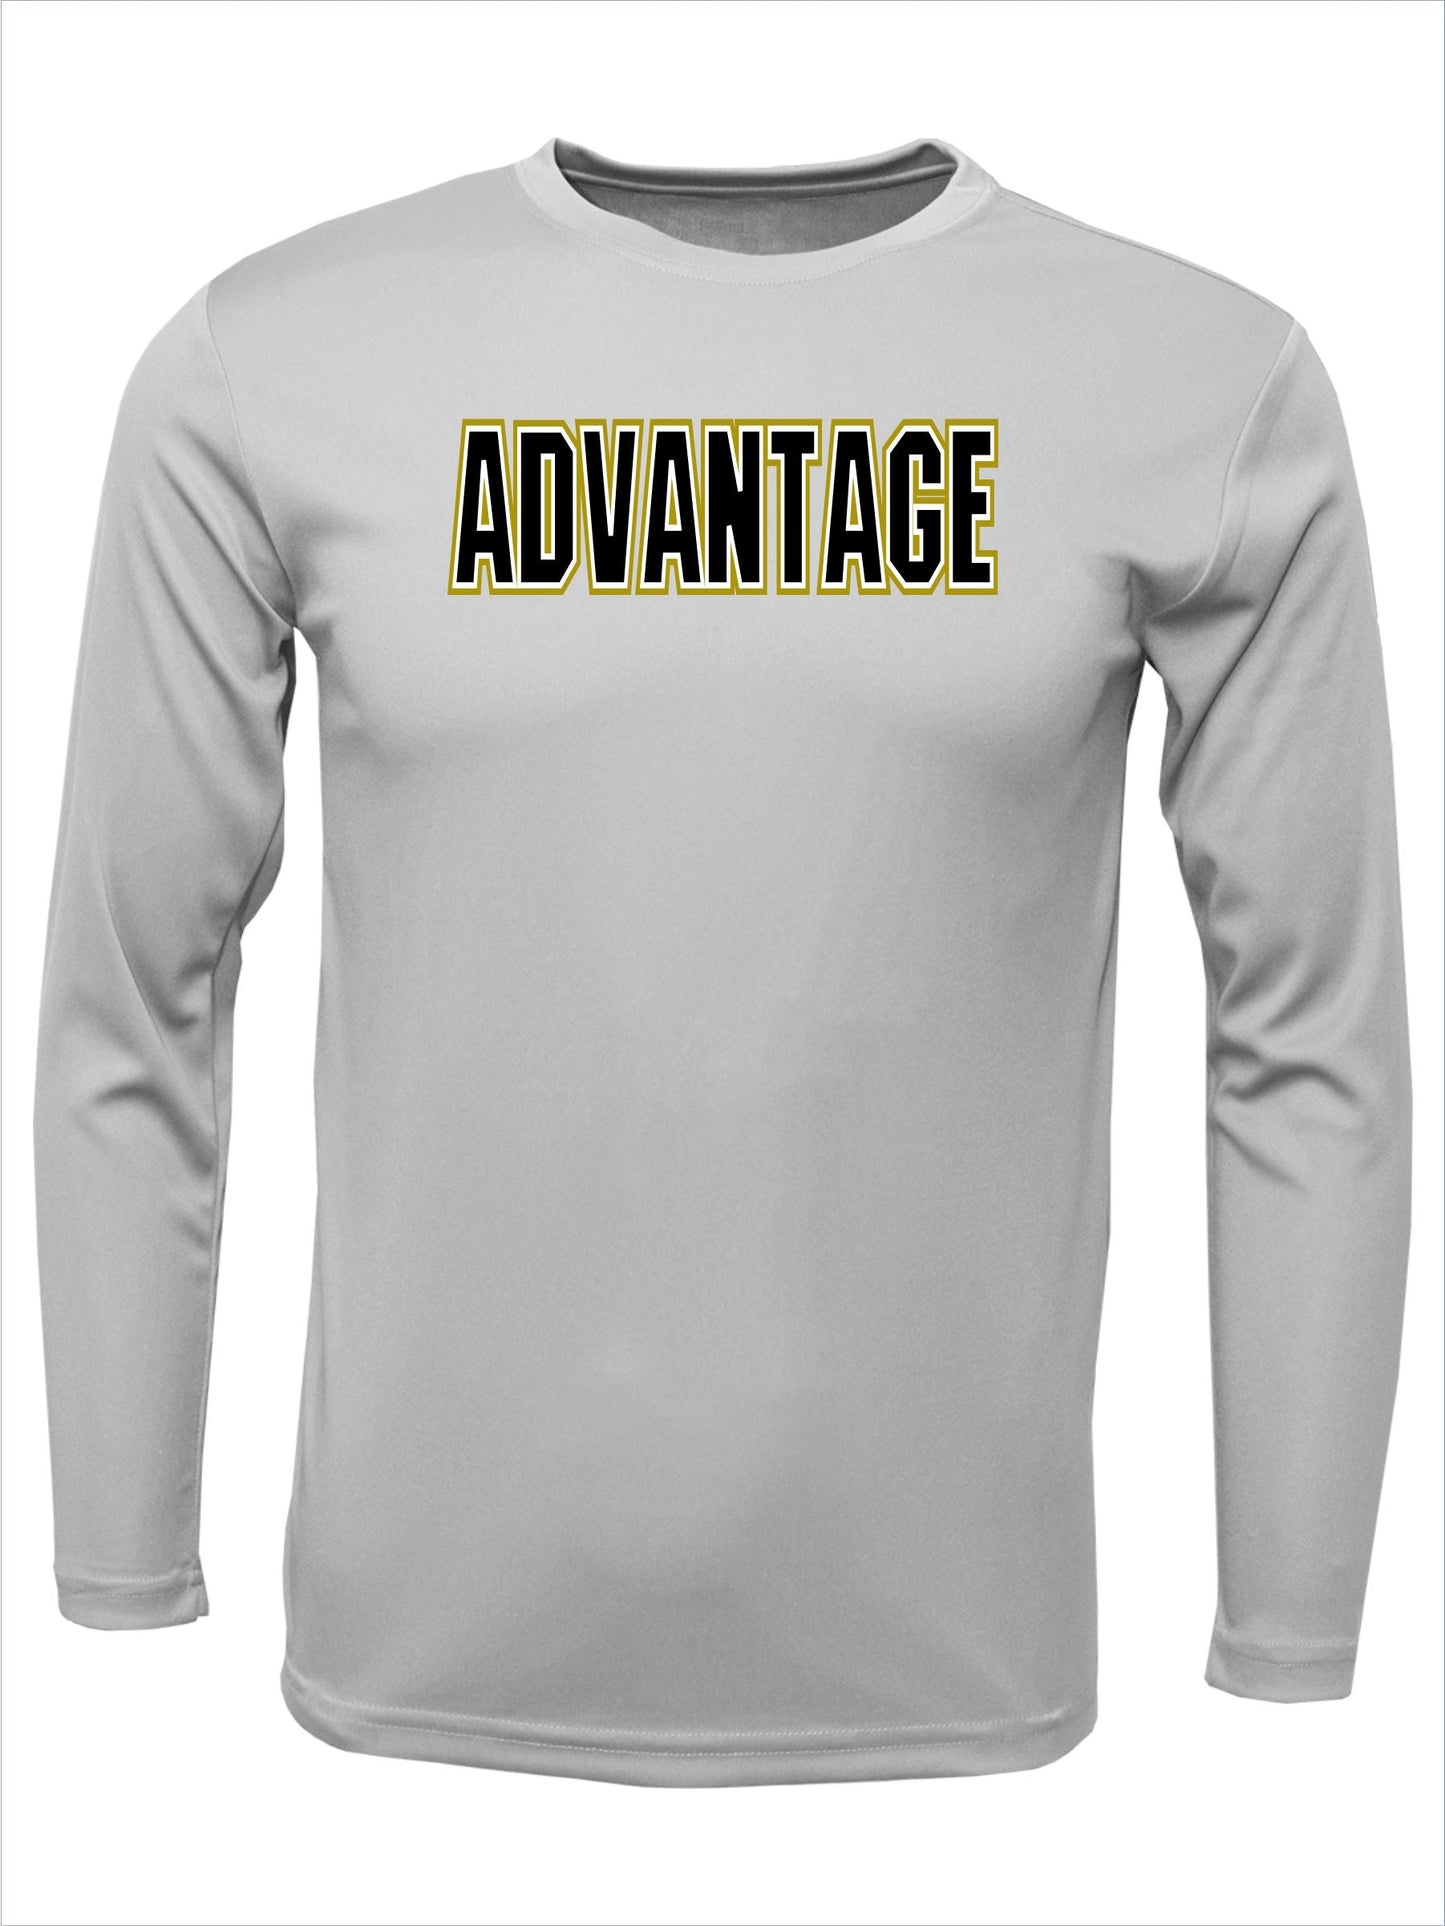 Long Sleeve "Advantage" Cotton T-Shirt